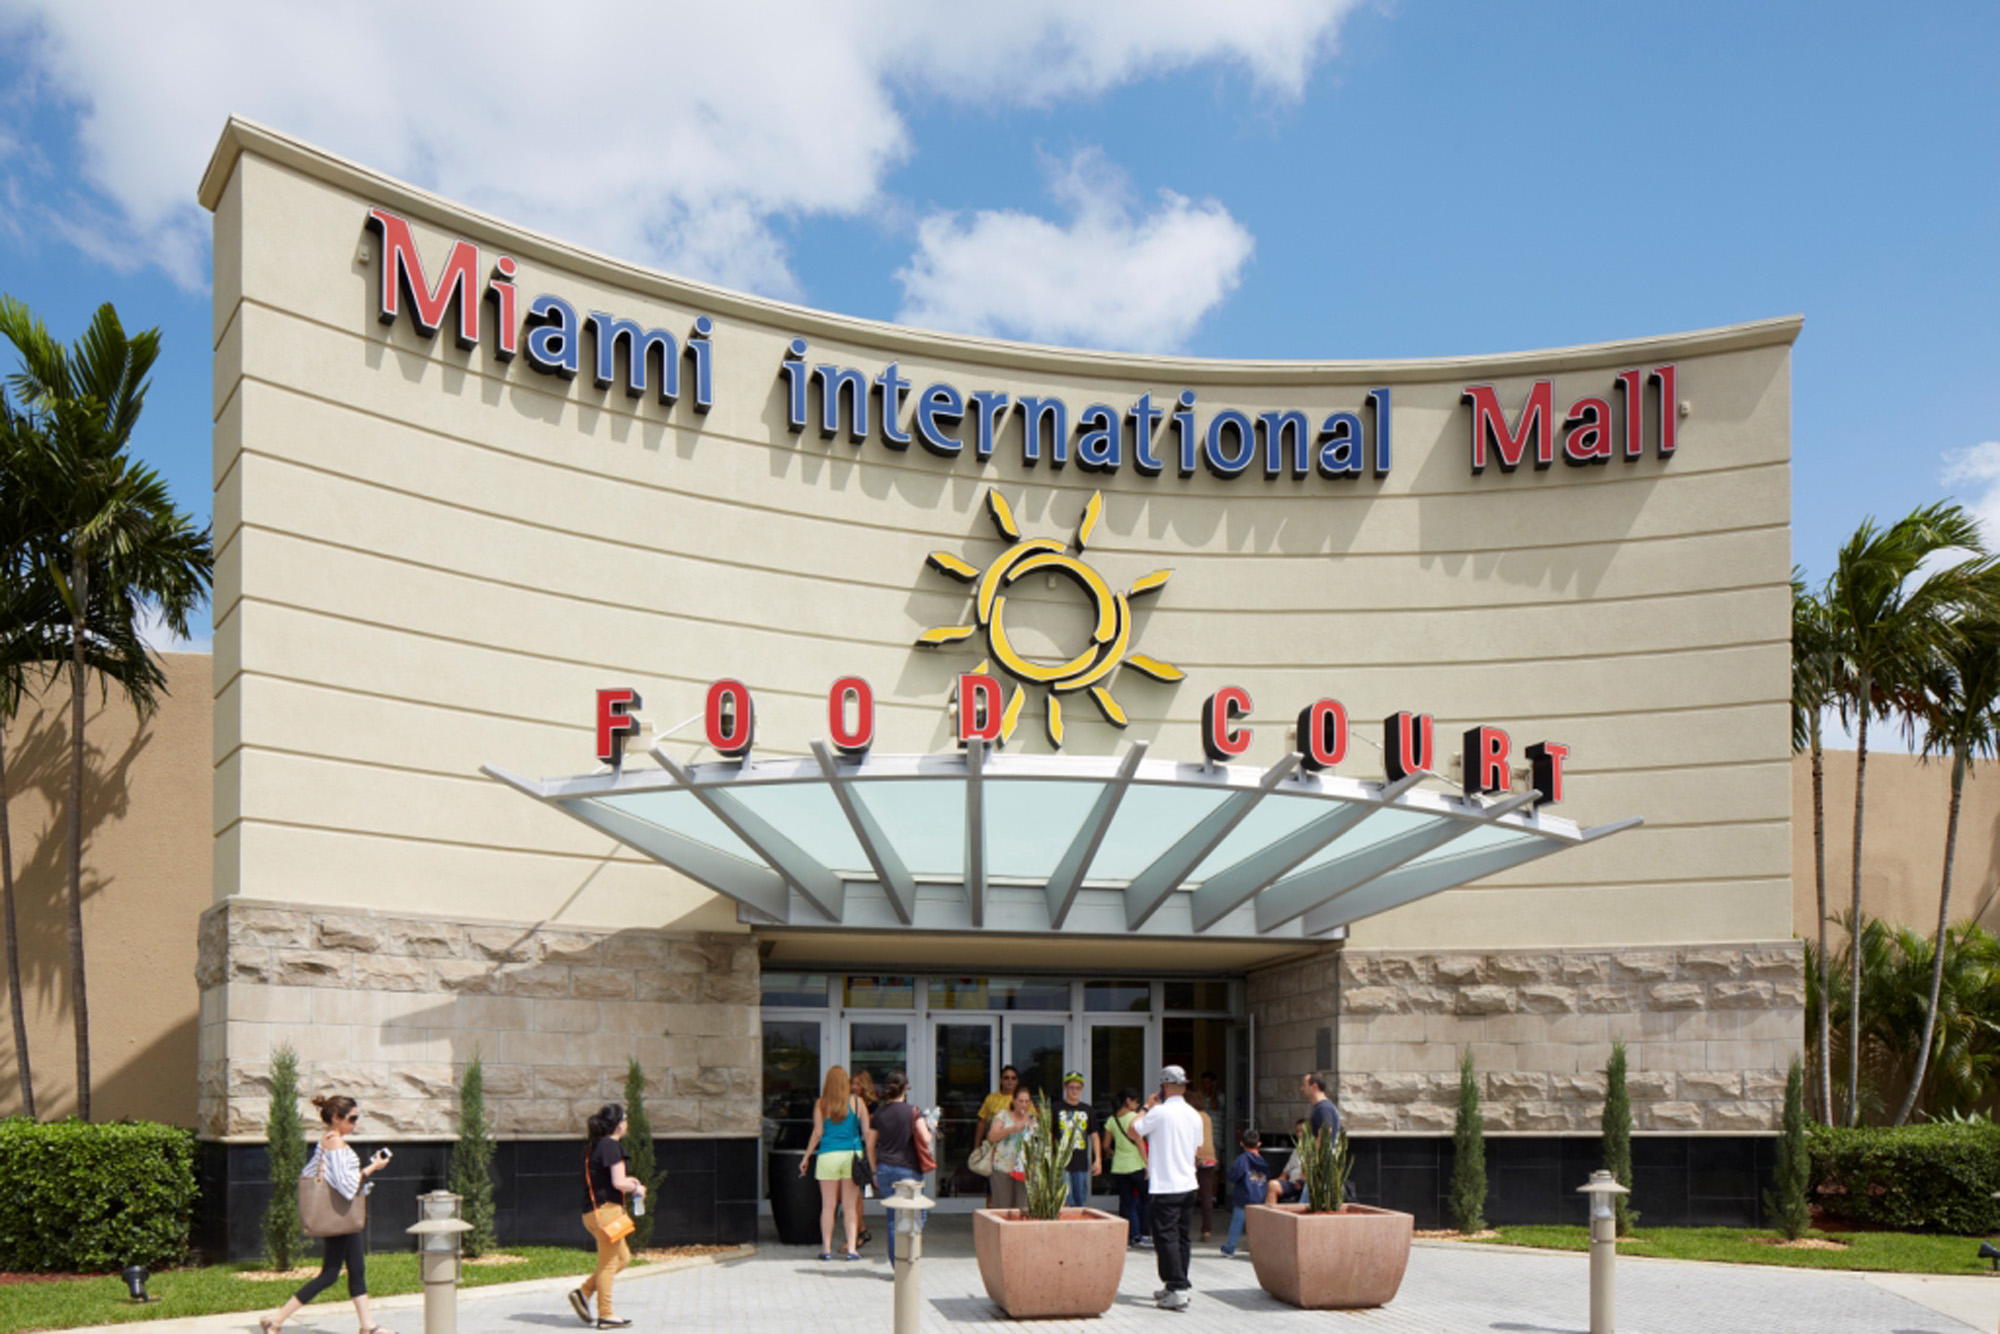 Miami International Mall Food Court entrance